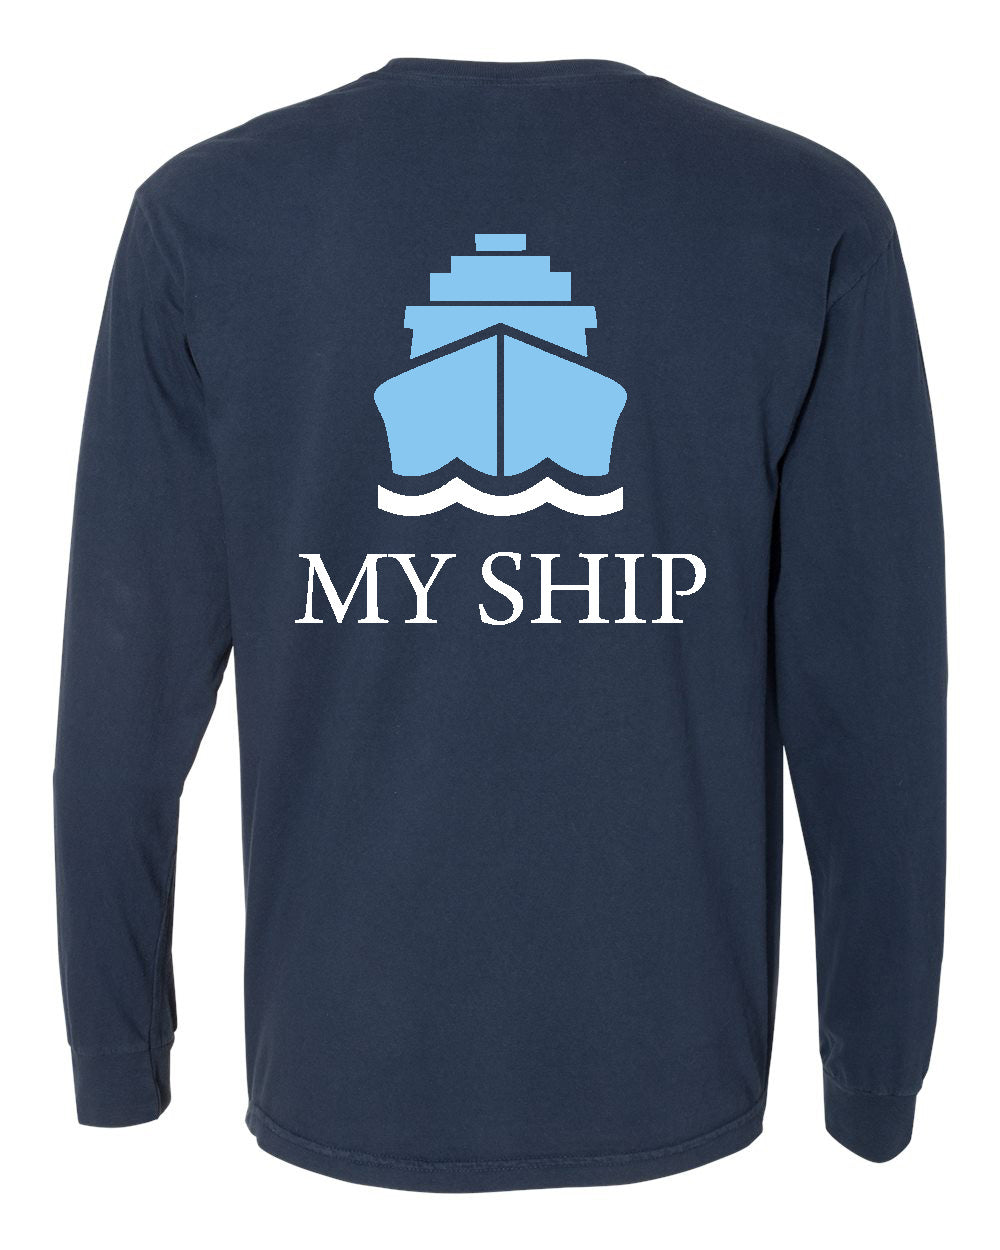 My Ship longsleeve Navy